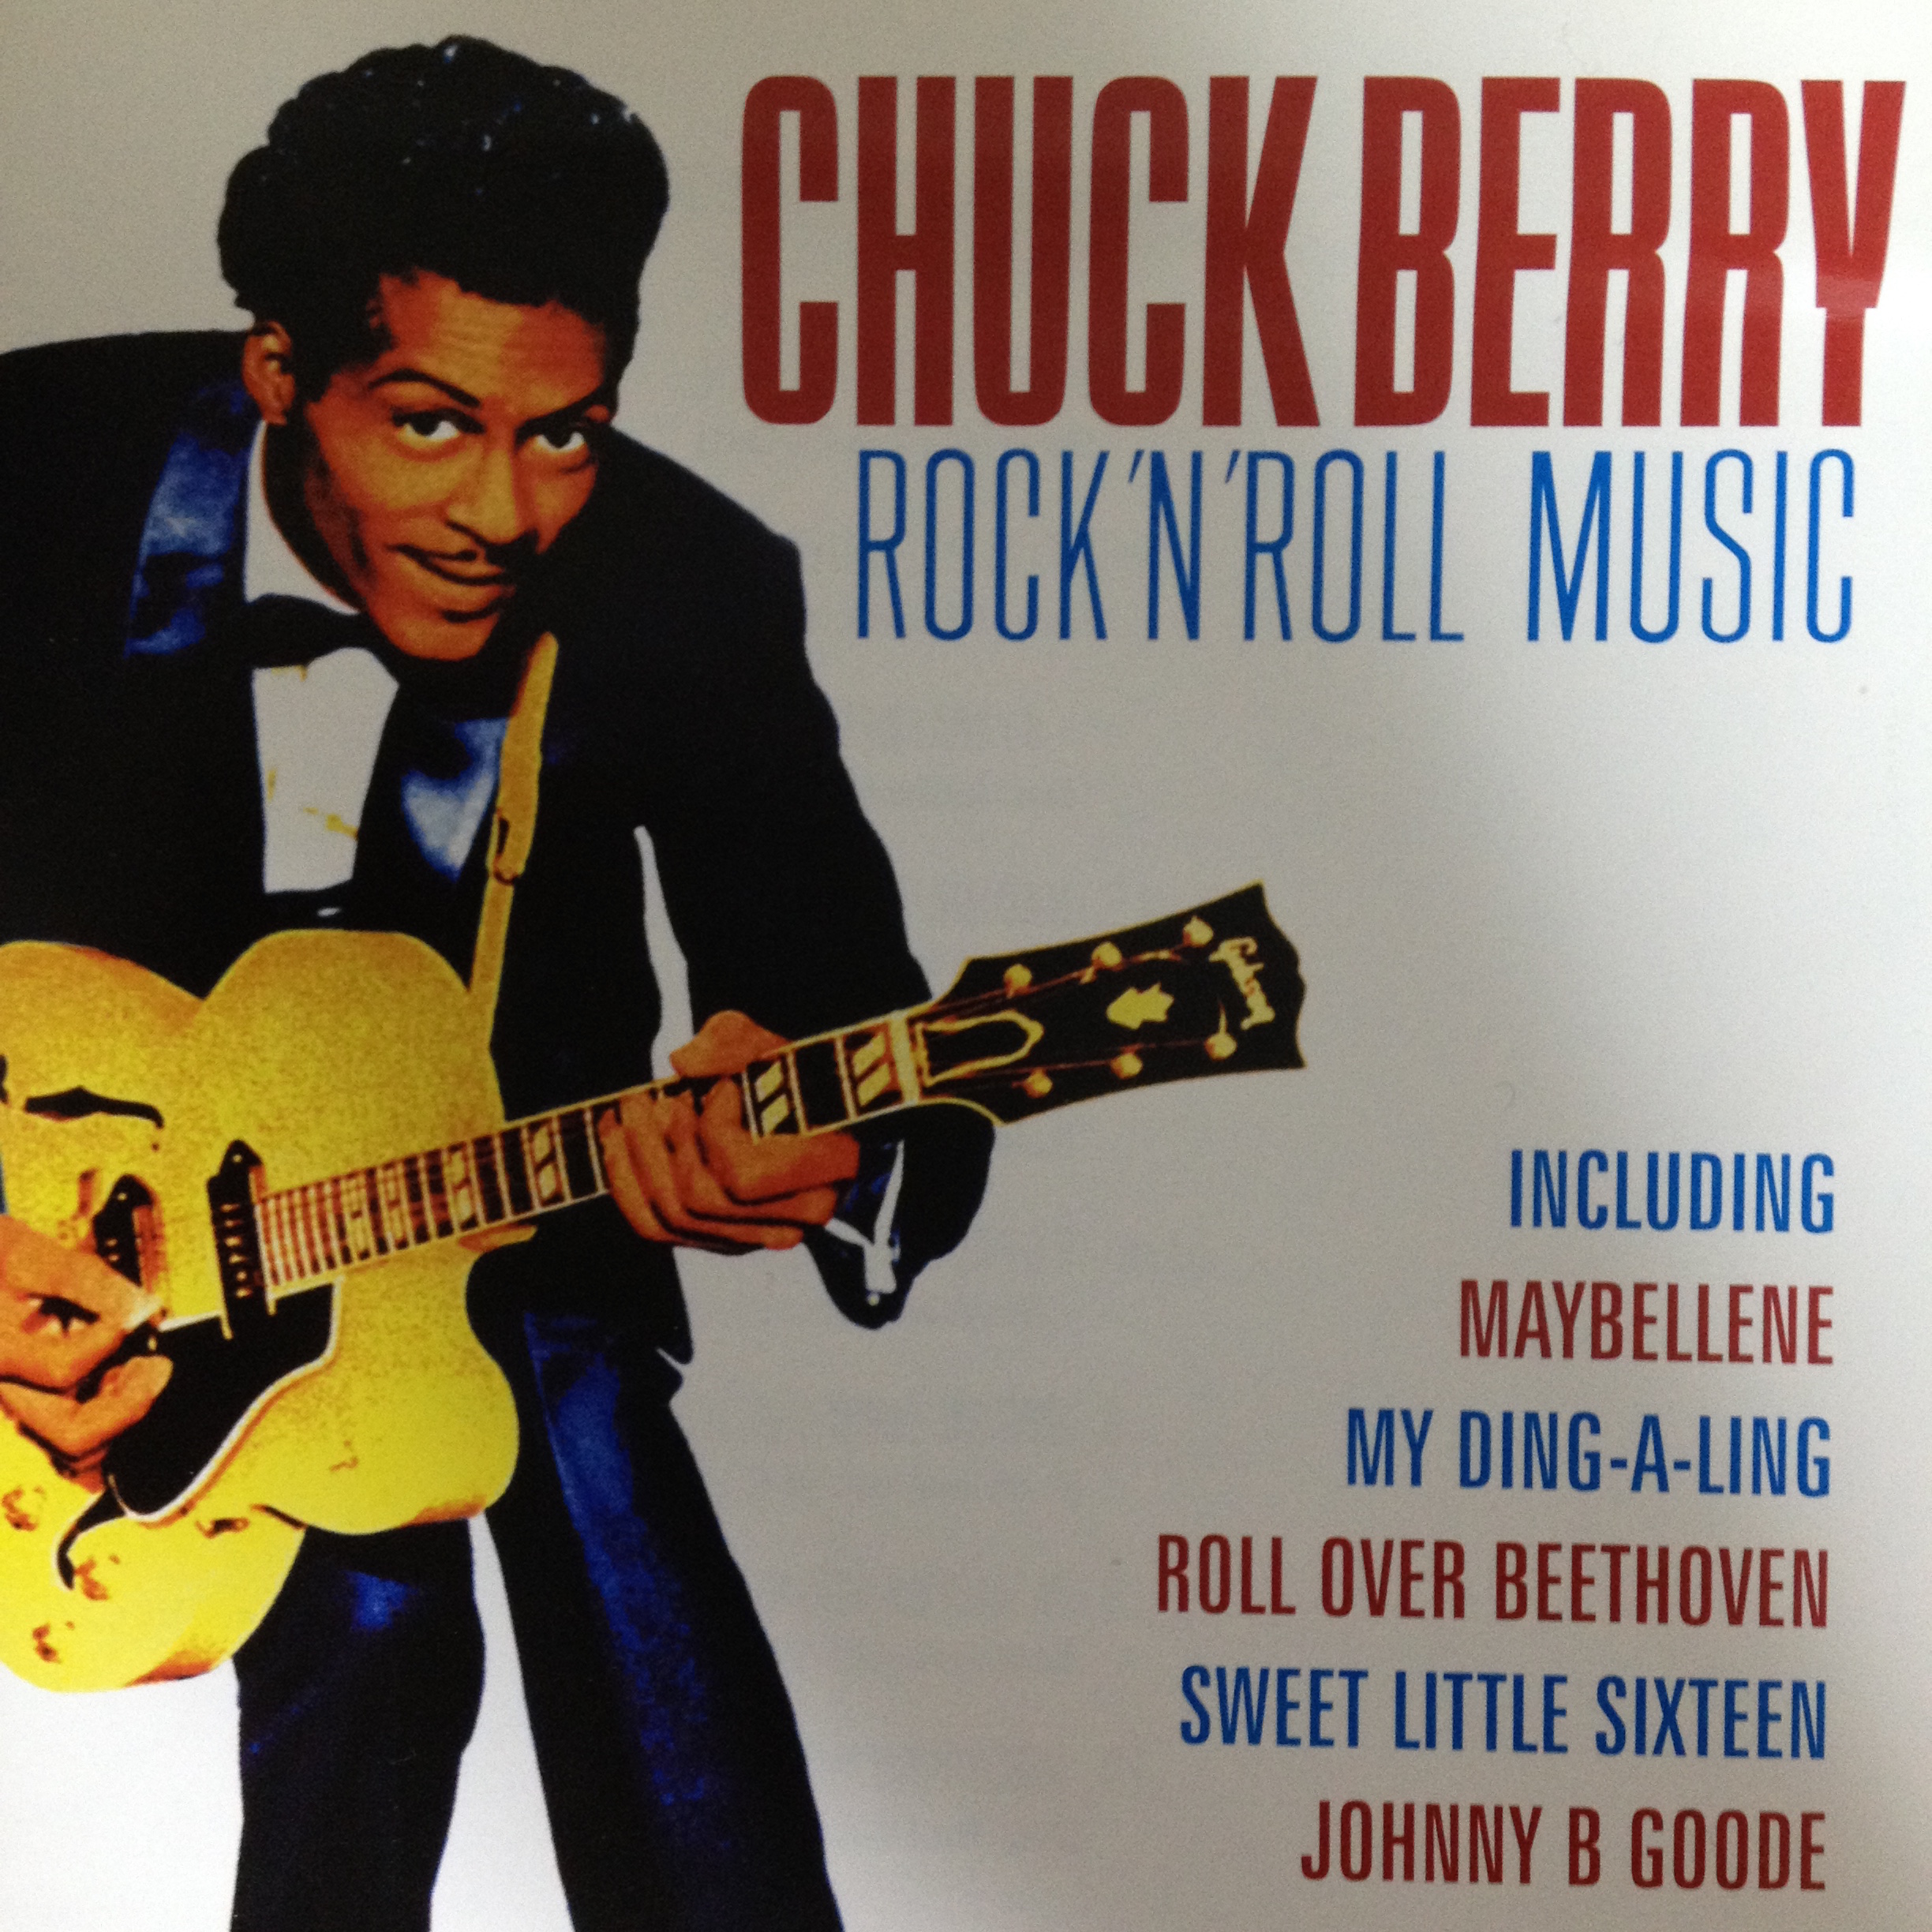 CHUCK BERRY 「ROCK'N ROLL MUSIC」